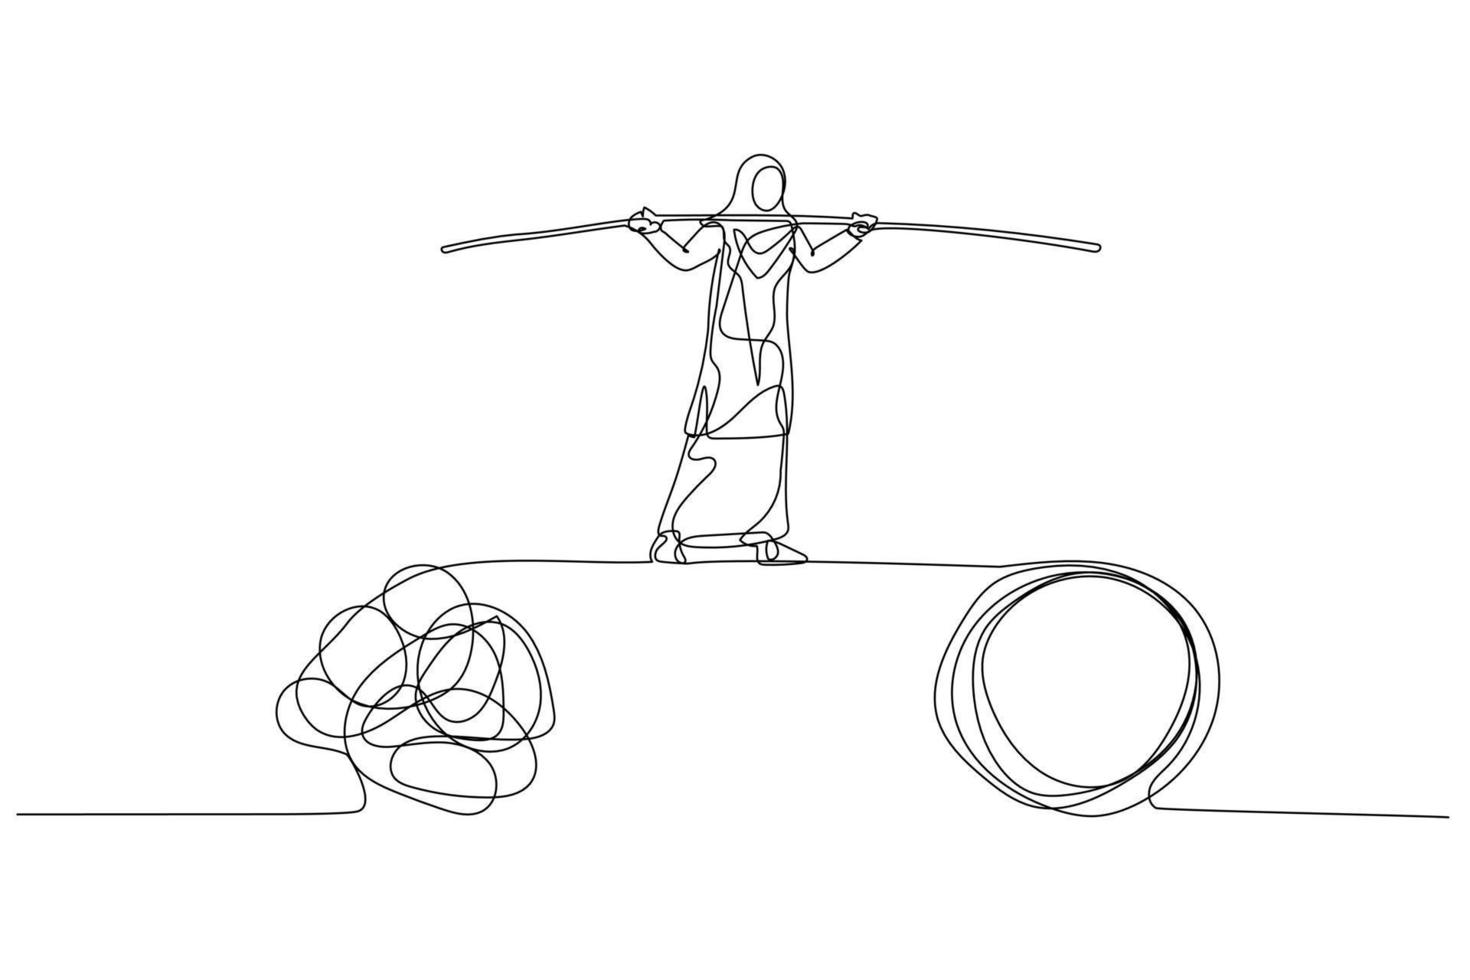 Cartoon of muslim woman walk on tight rope balancing between problem. Single line art style vector